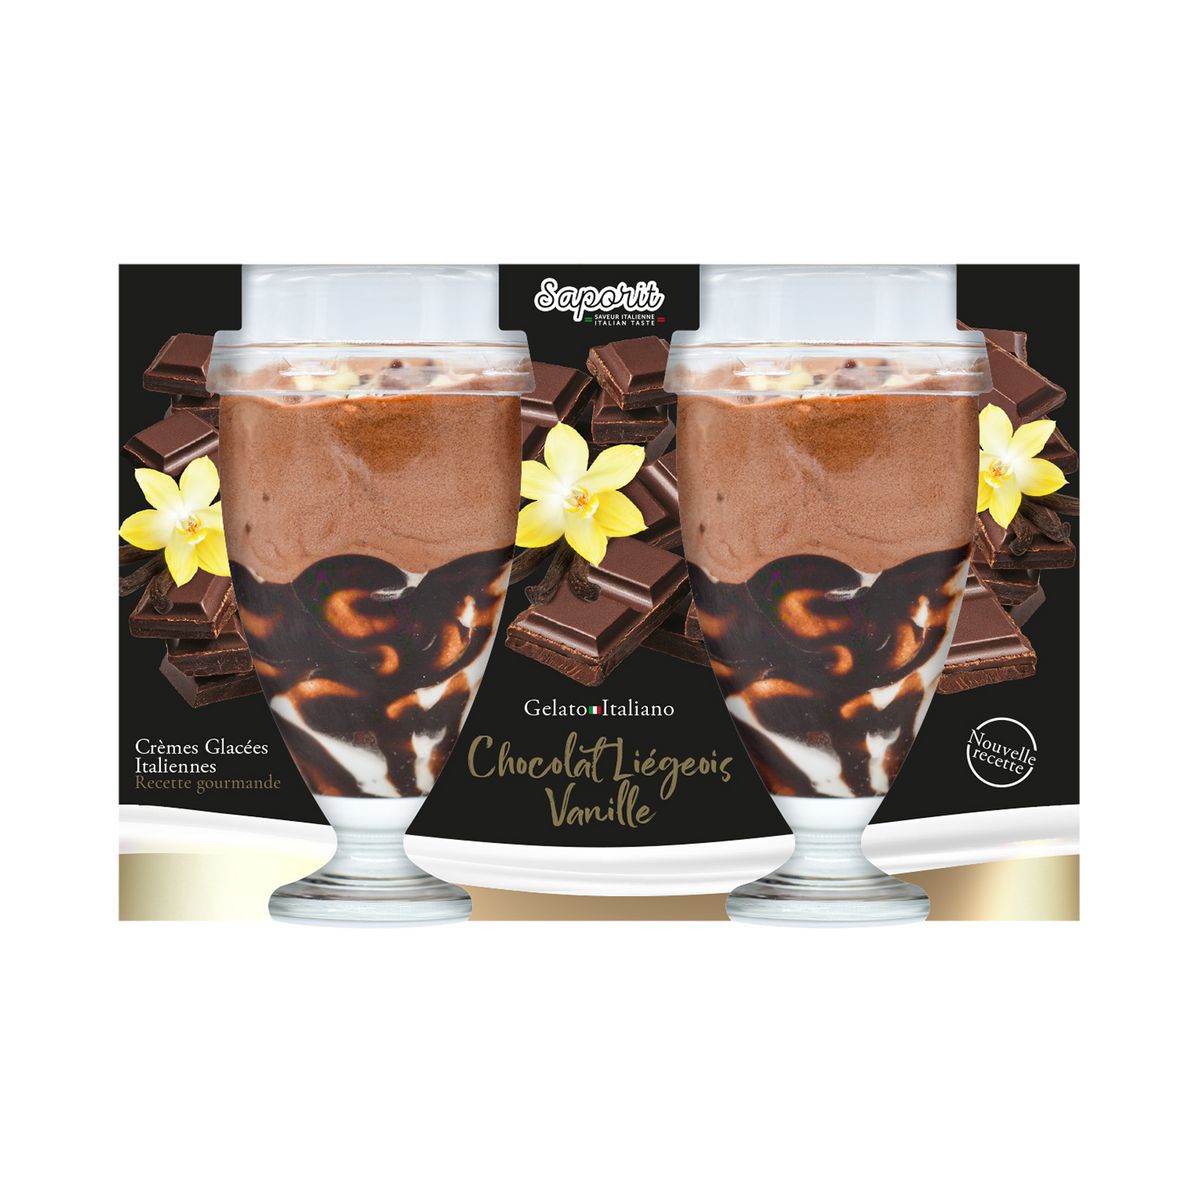 SAPORIT Coppa chocolat liégeois vanille 2 pièces 180g